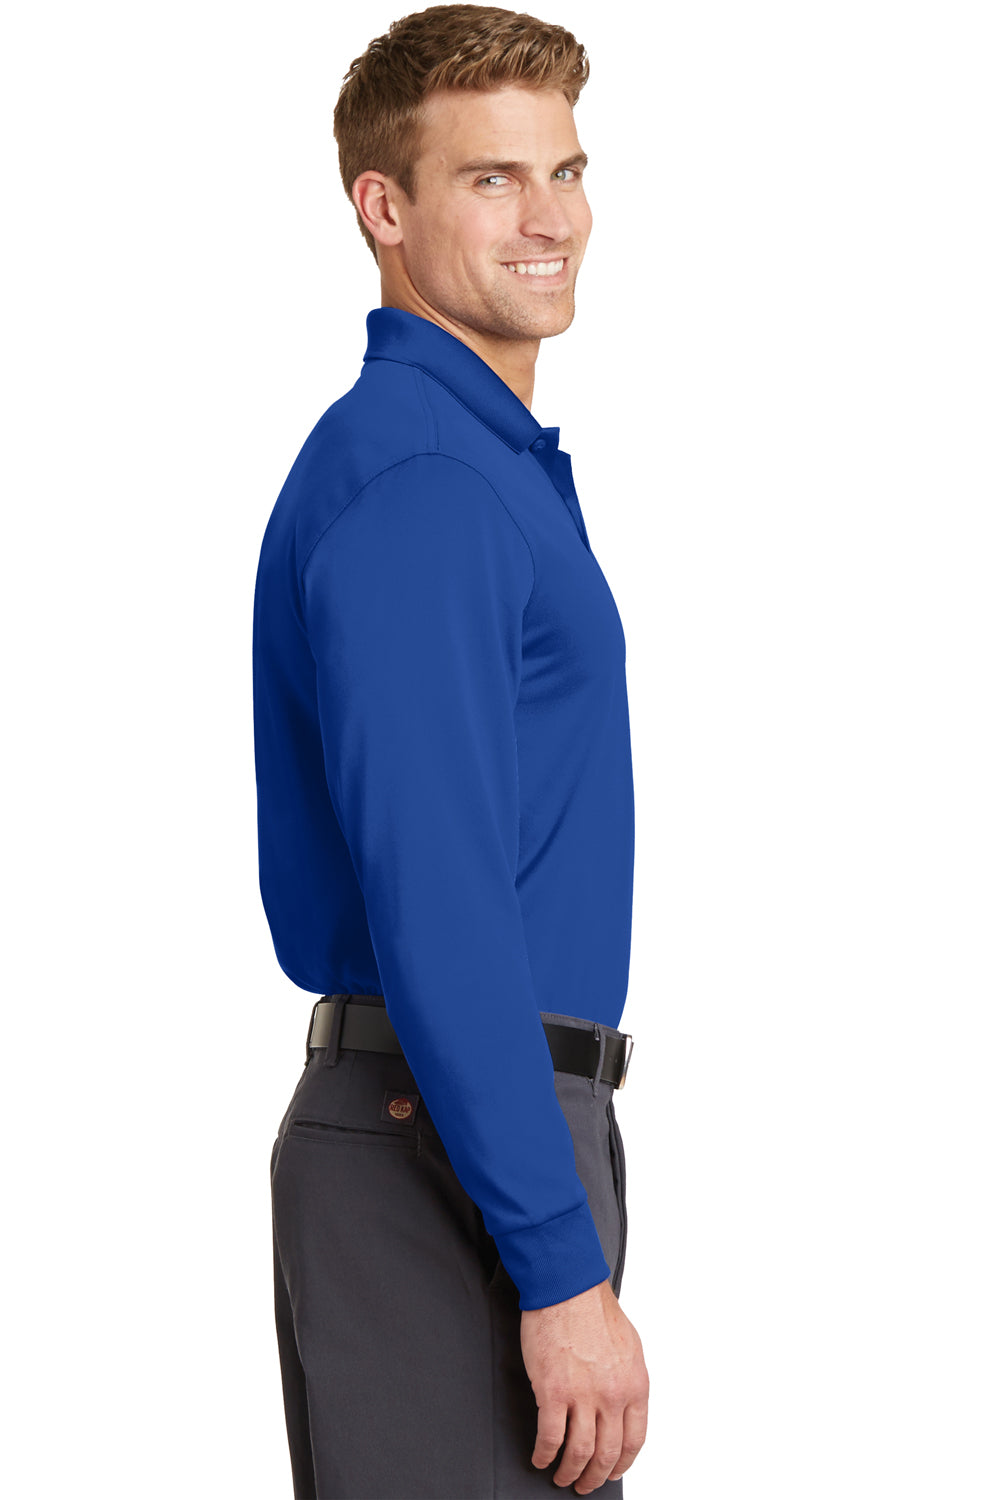 CornerStone CS412LS Mens Select Moisture Wicking Long Sleeve Polo Shirt Royal Blue Side